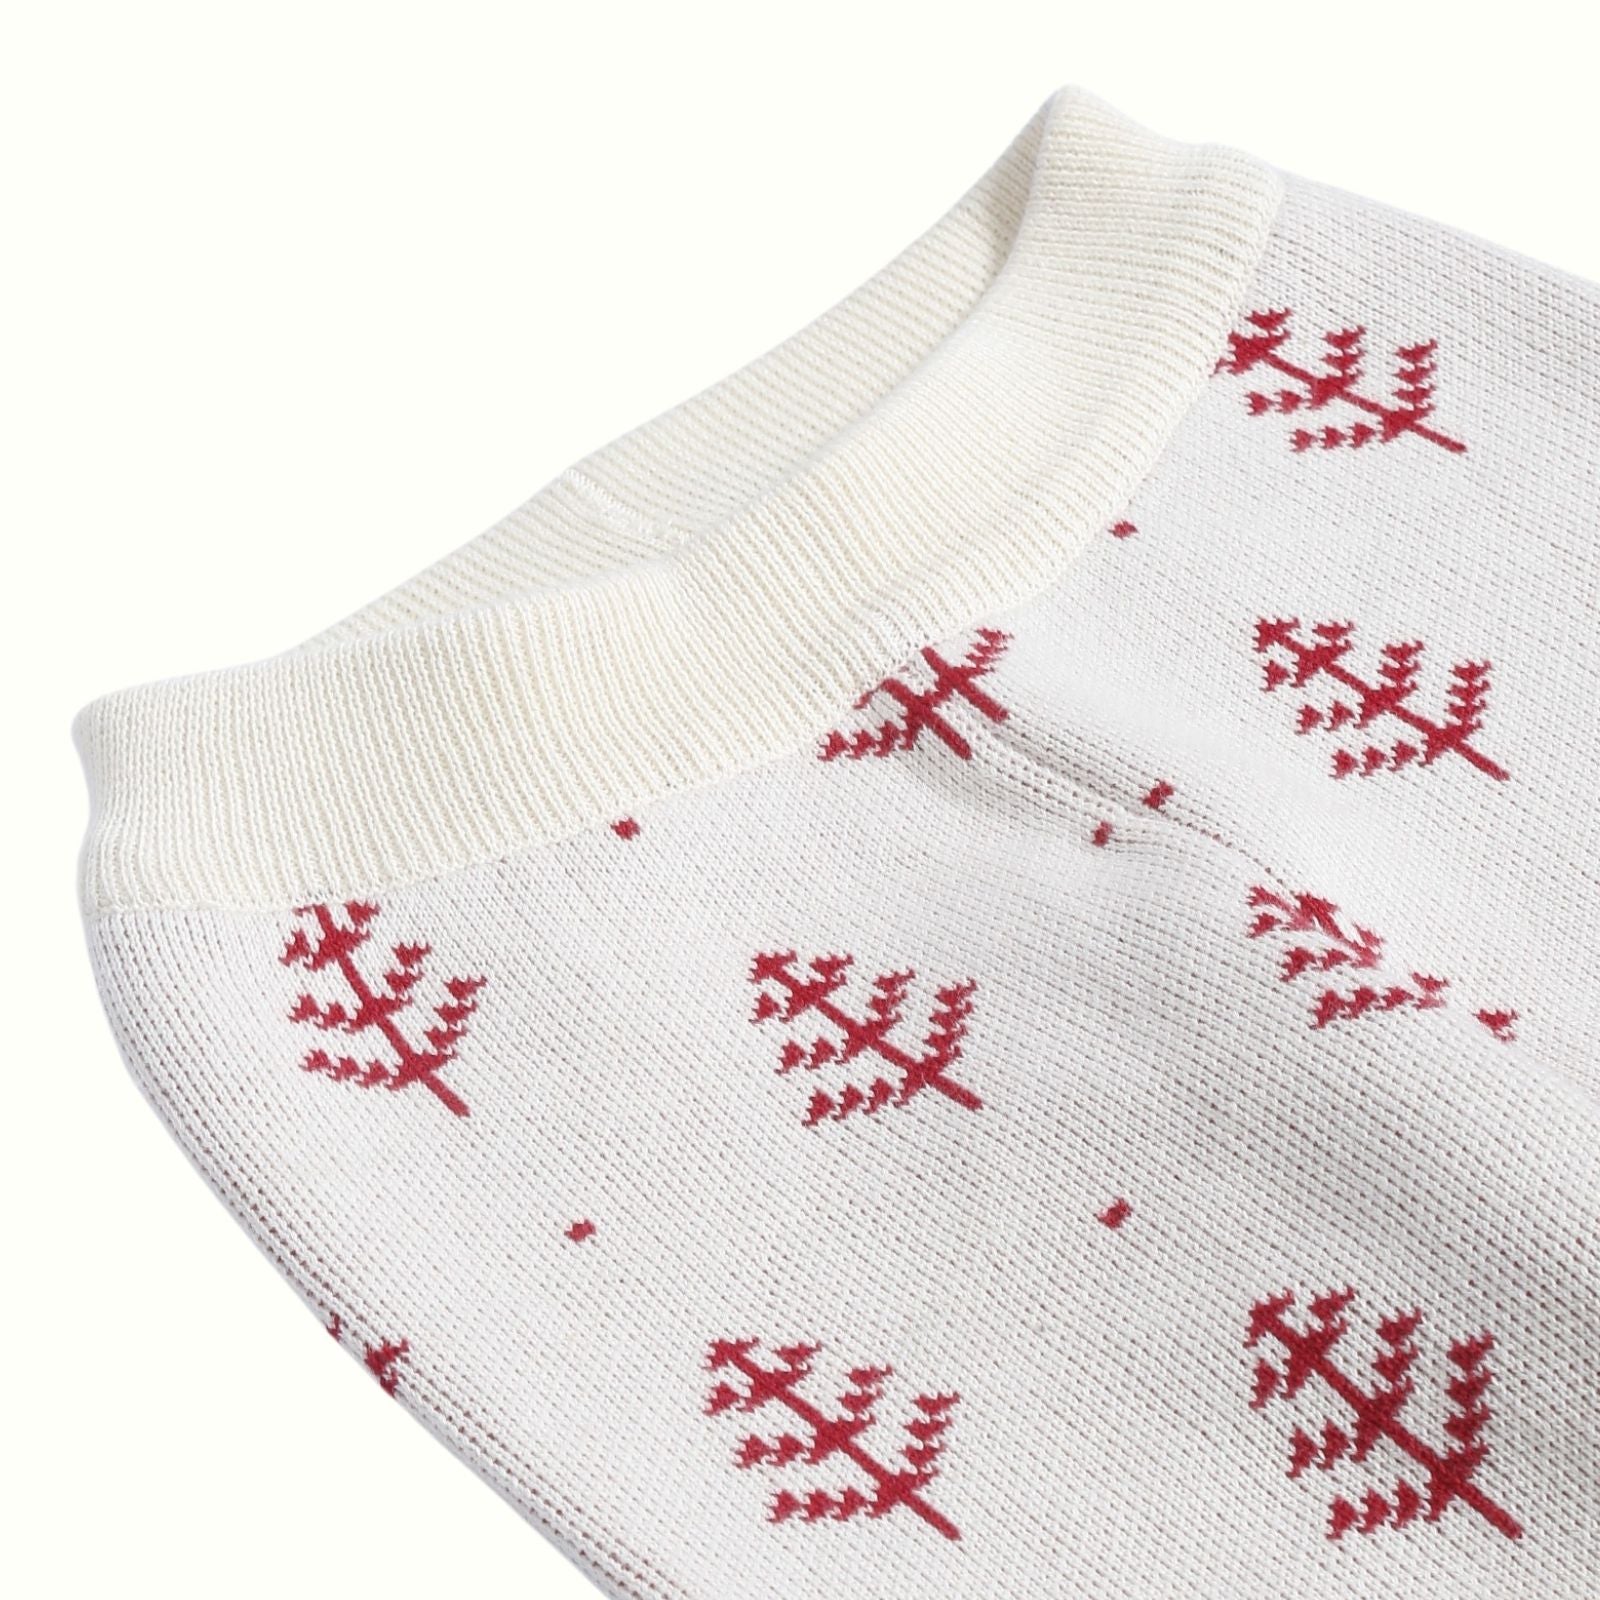 Greendeer Joyful Reindeer Jacquard 100% Cotton Sweater with Lower Set of 4